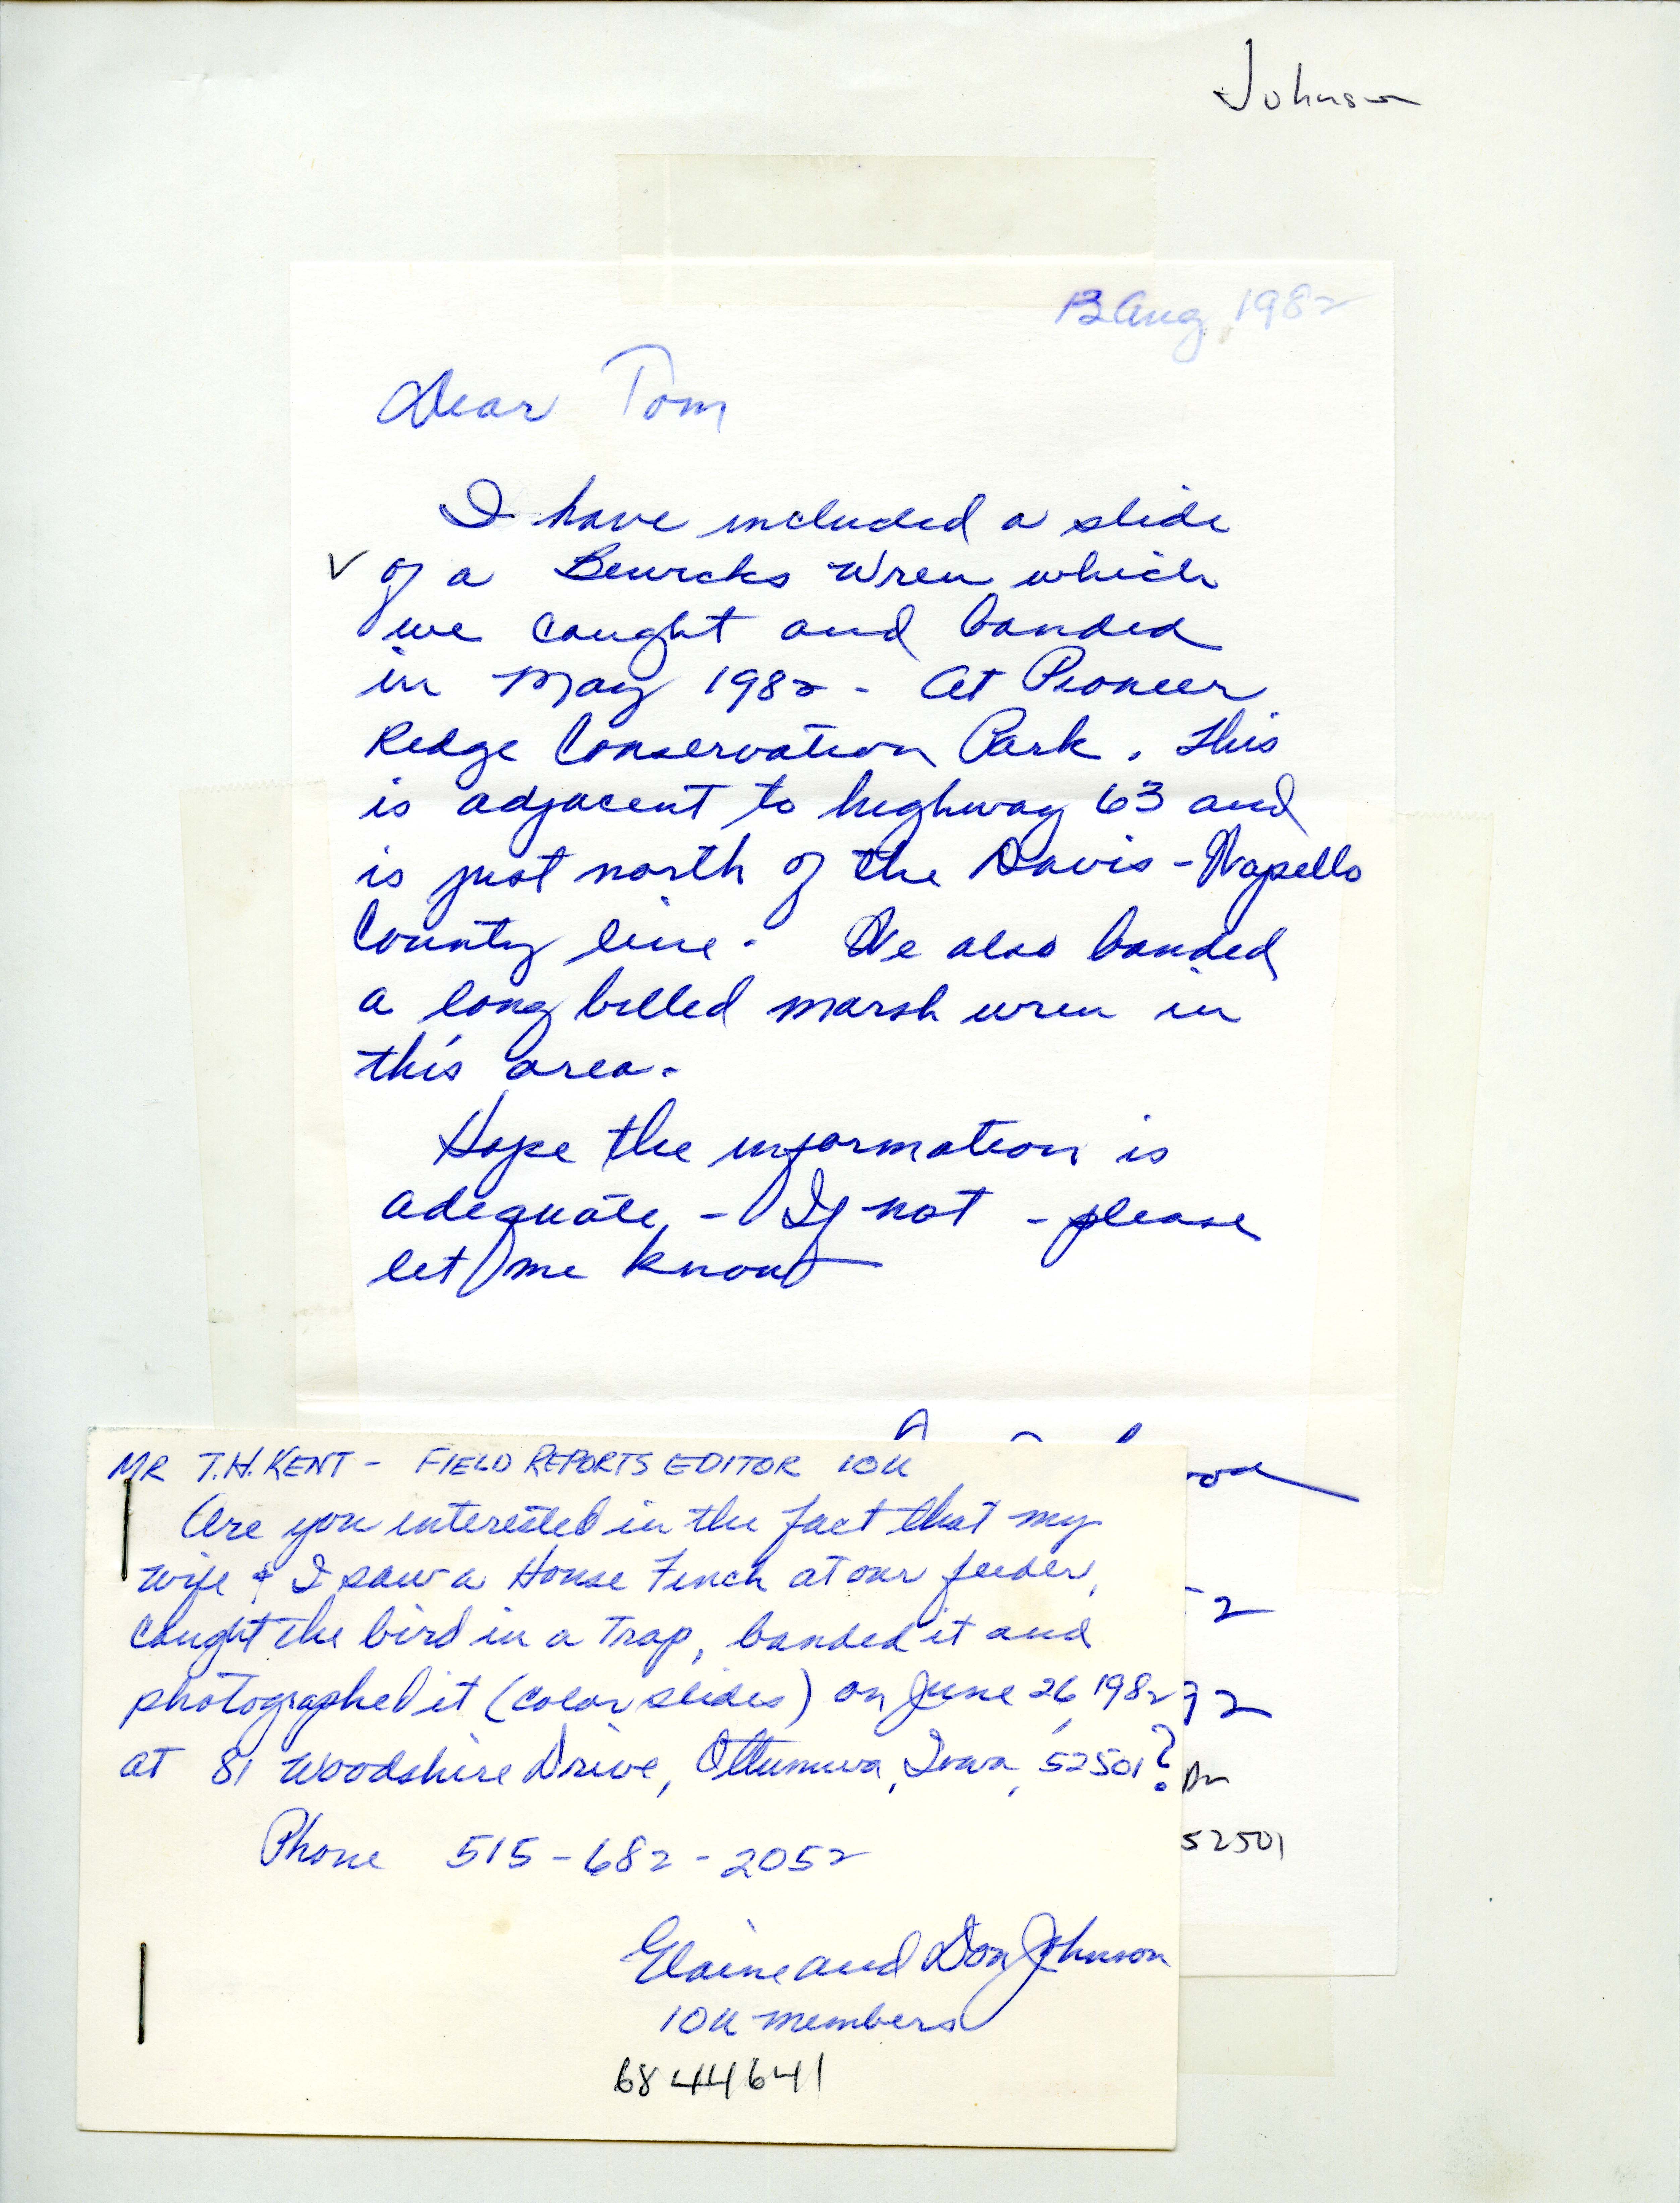 Elaine and Don Johnson letter to Thomas H. Kent regarding banding, August 13, 1982 